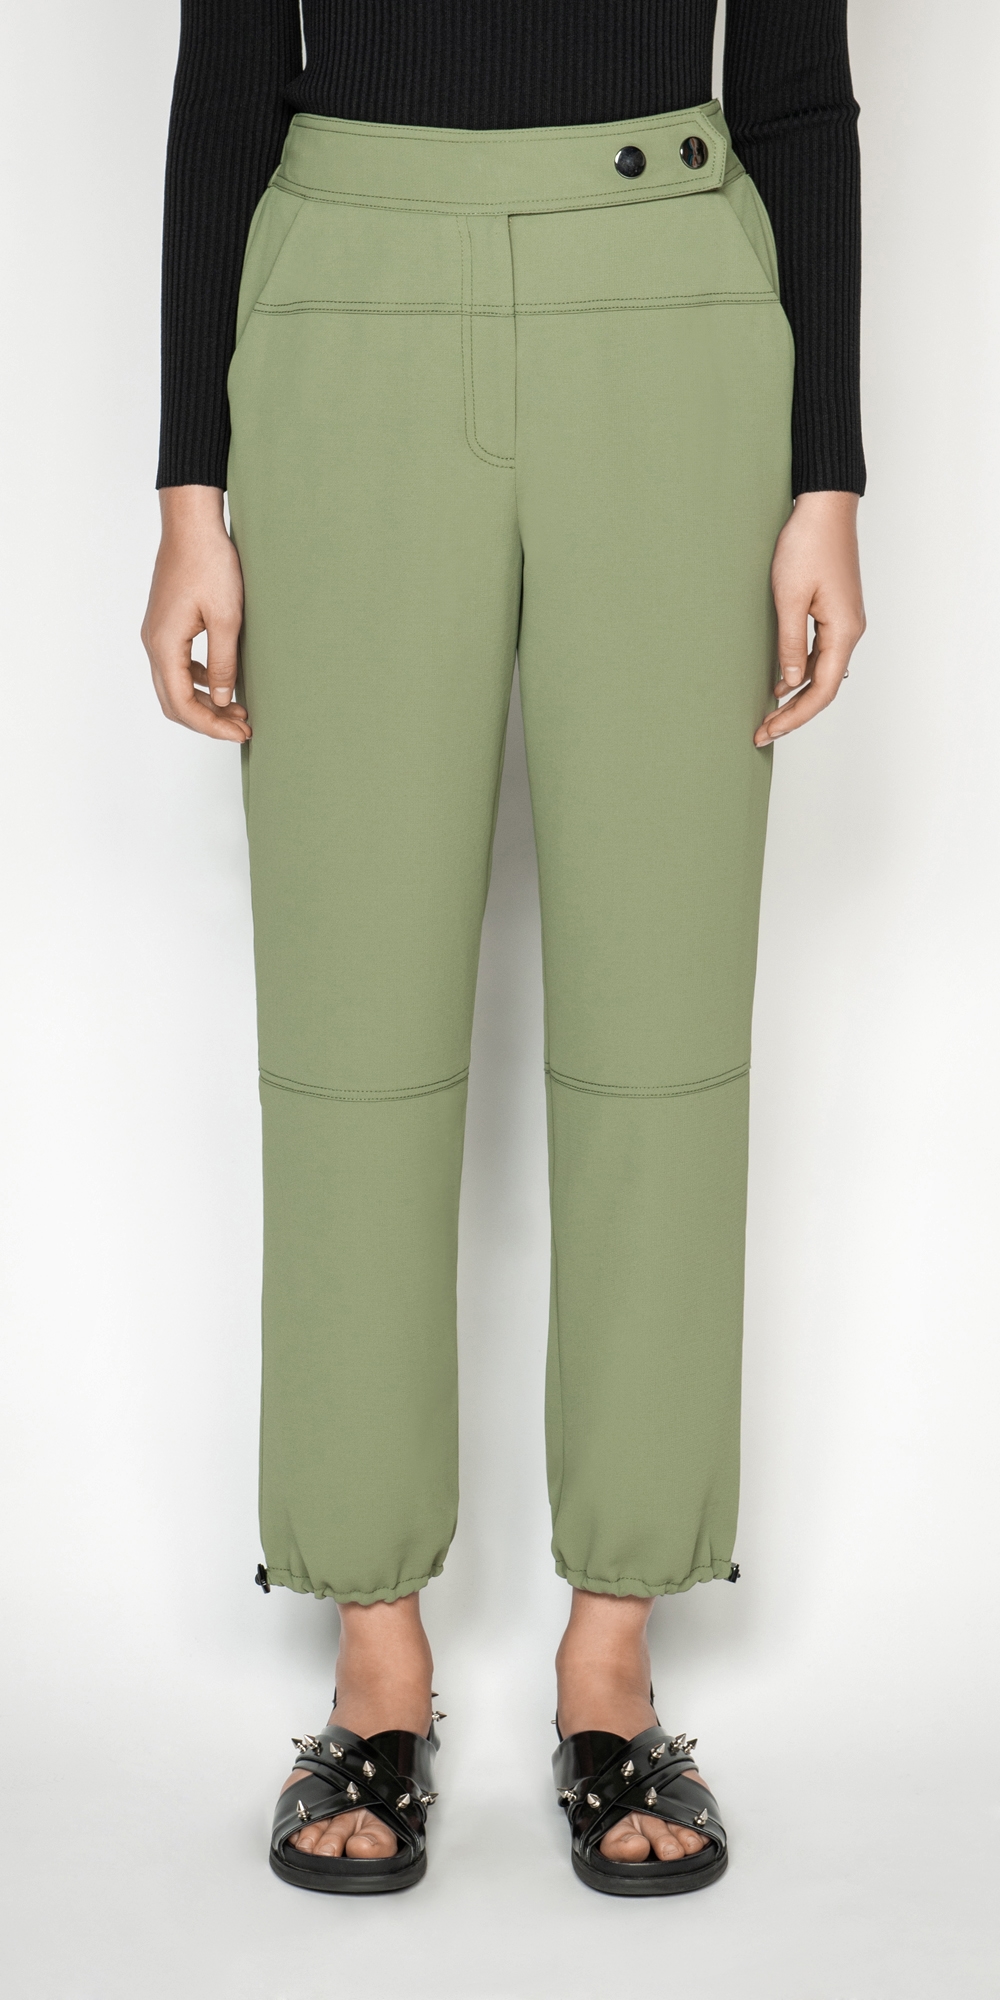 Khaki Drawstring Cuff Pant | Buy Pants Online - Cue